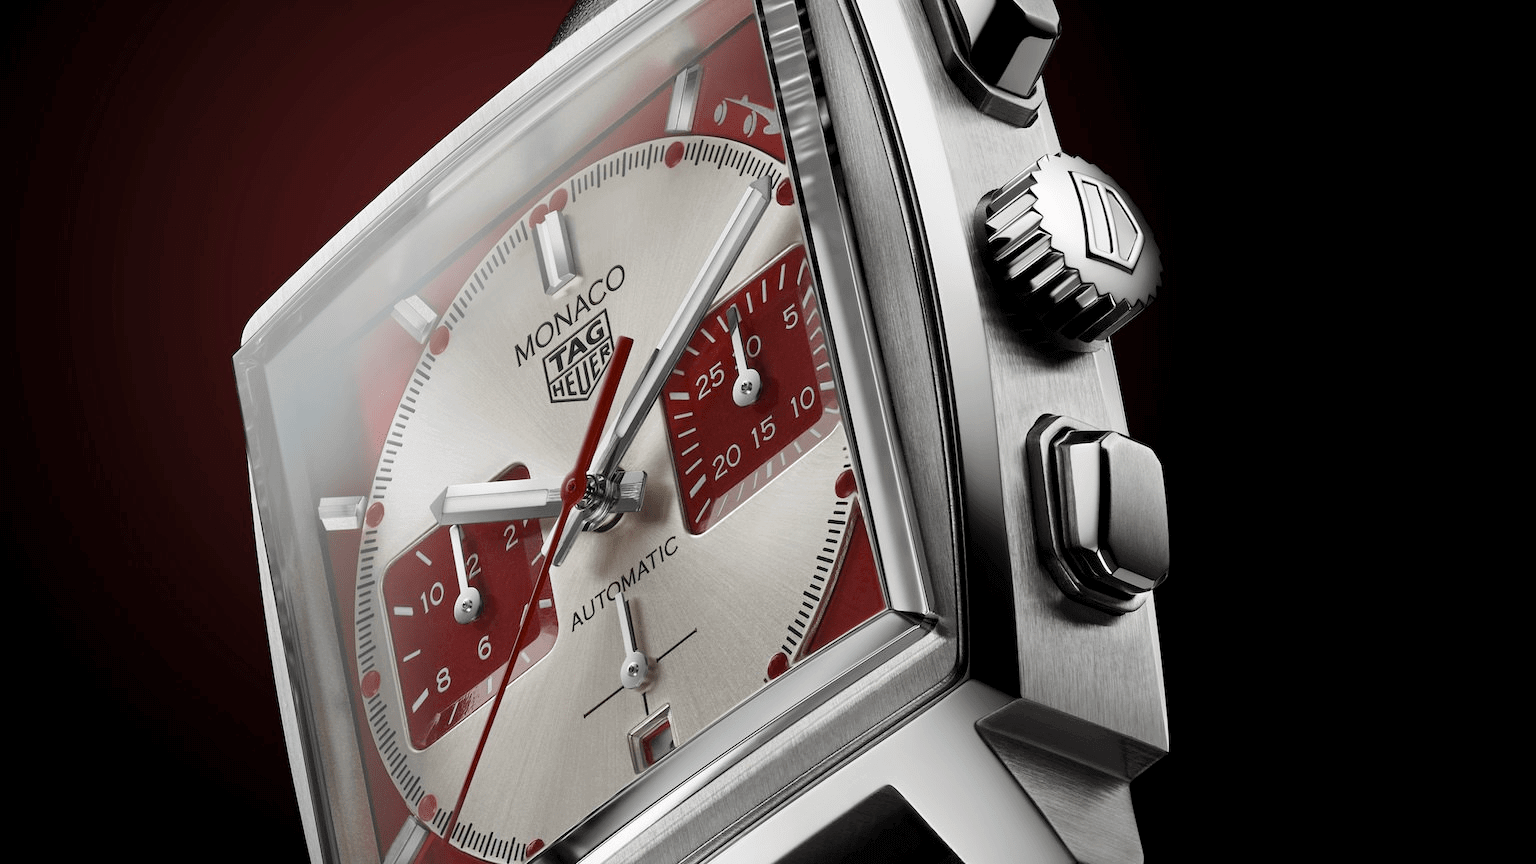 đồng hồ TAG Heuer Monaco Grand Prix de Monaco Historique 2020 mặt số đỏ bạc